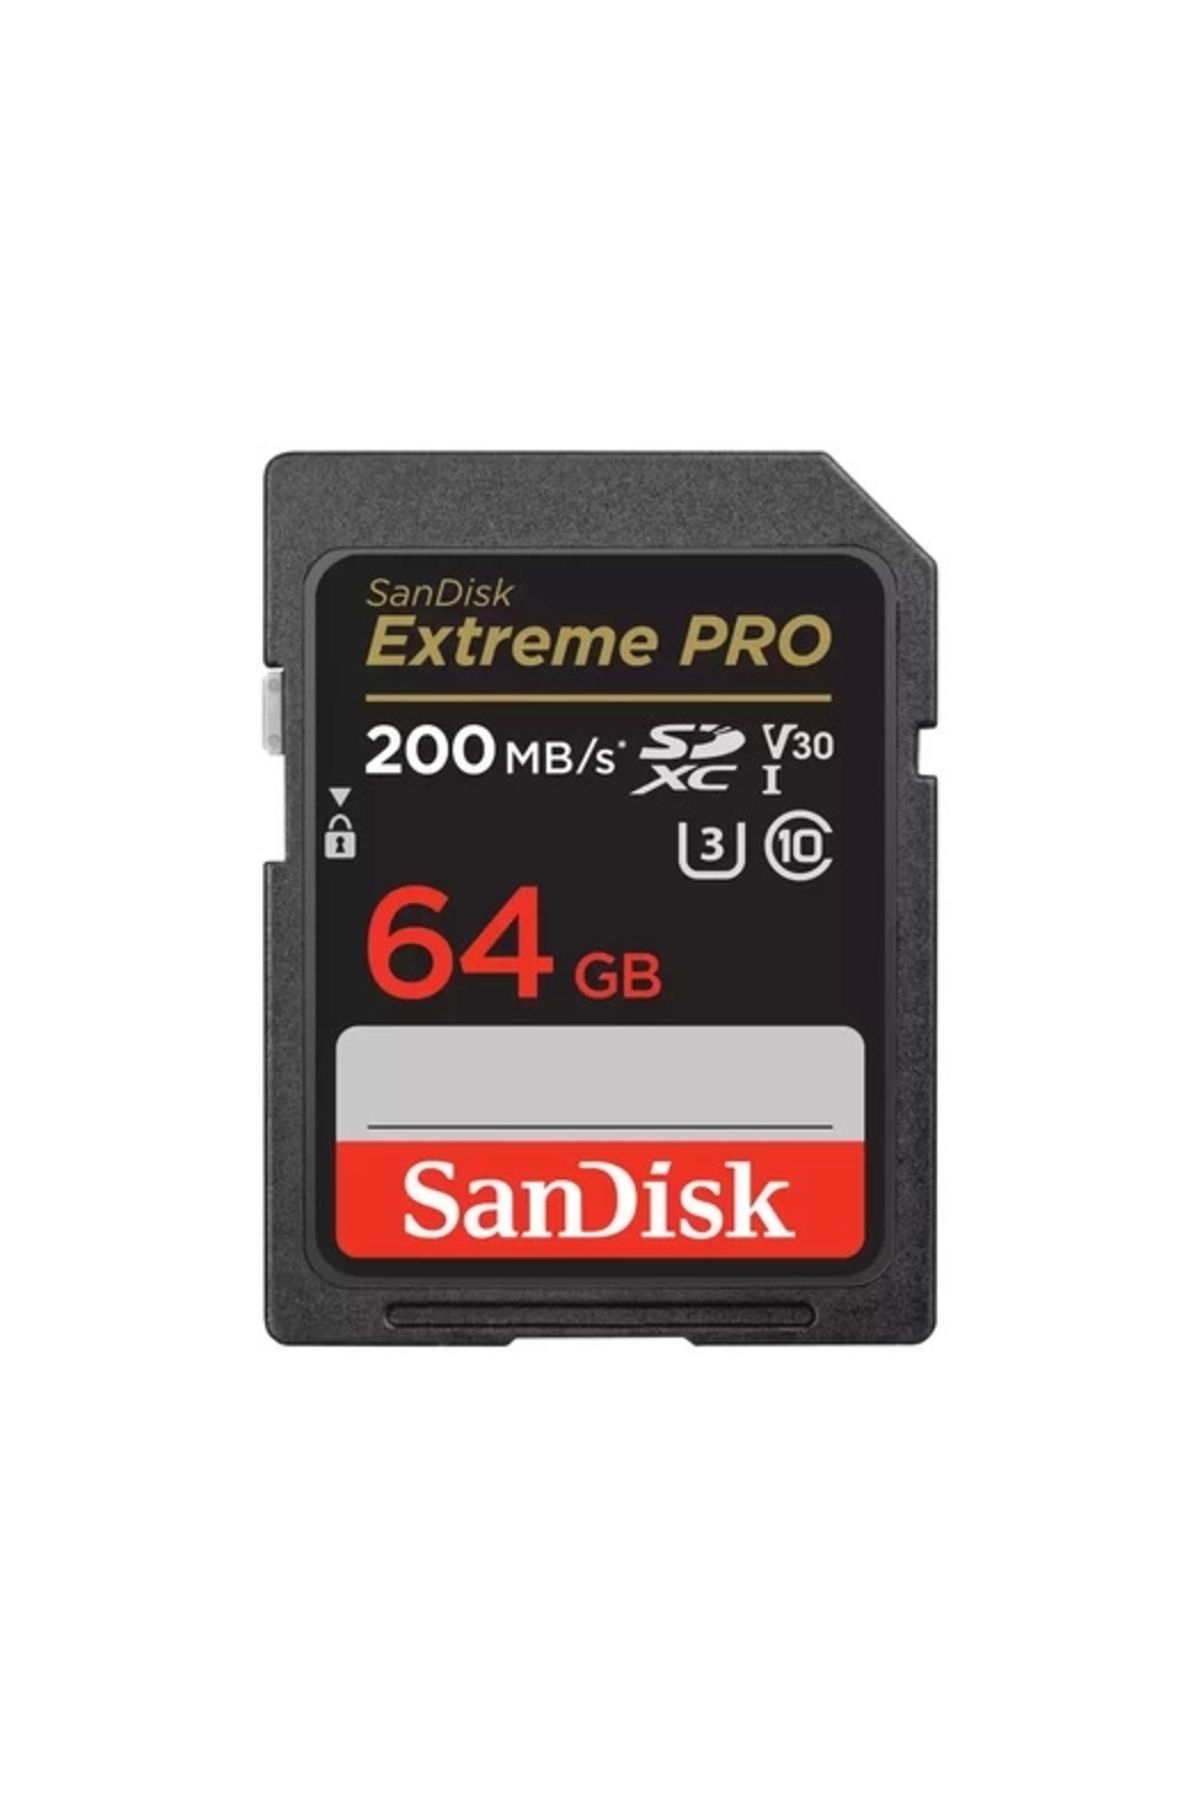 Sandisk Extreme Pro SD UHS I 64GB Card